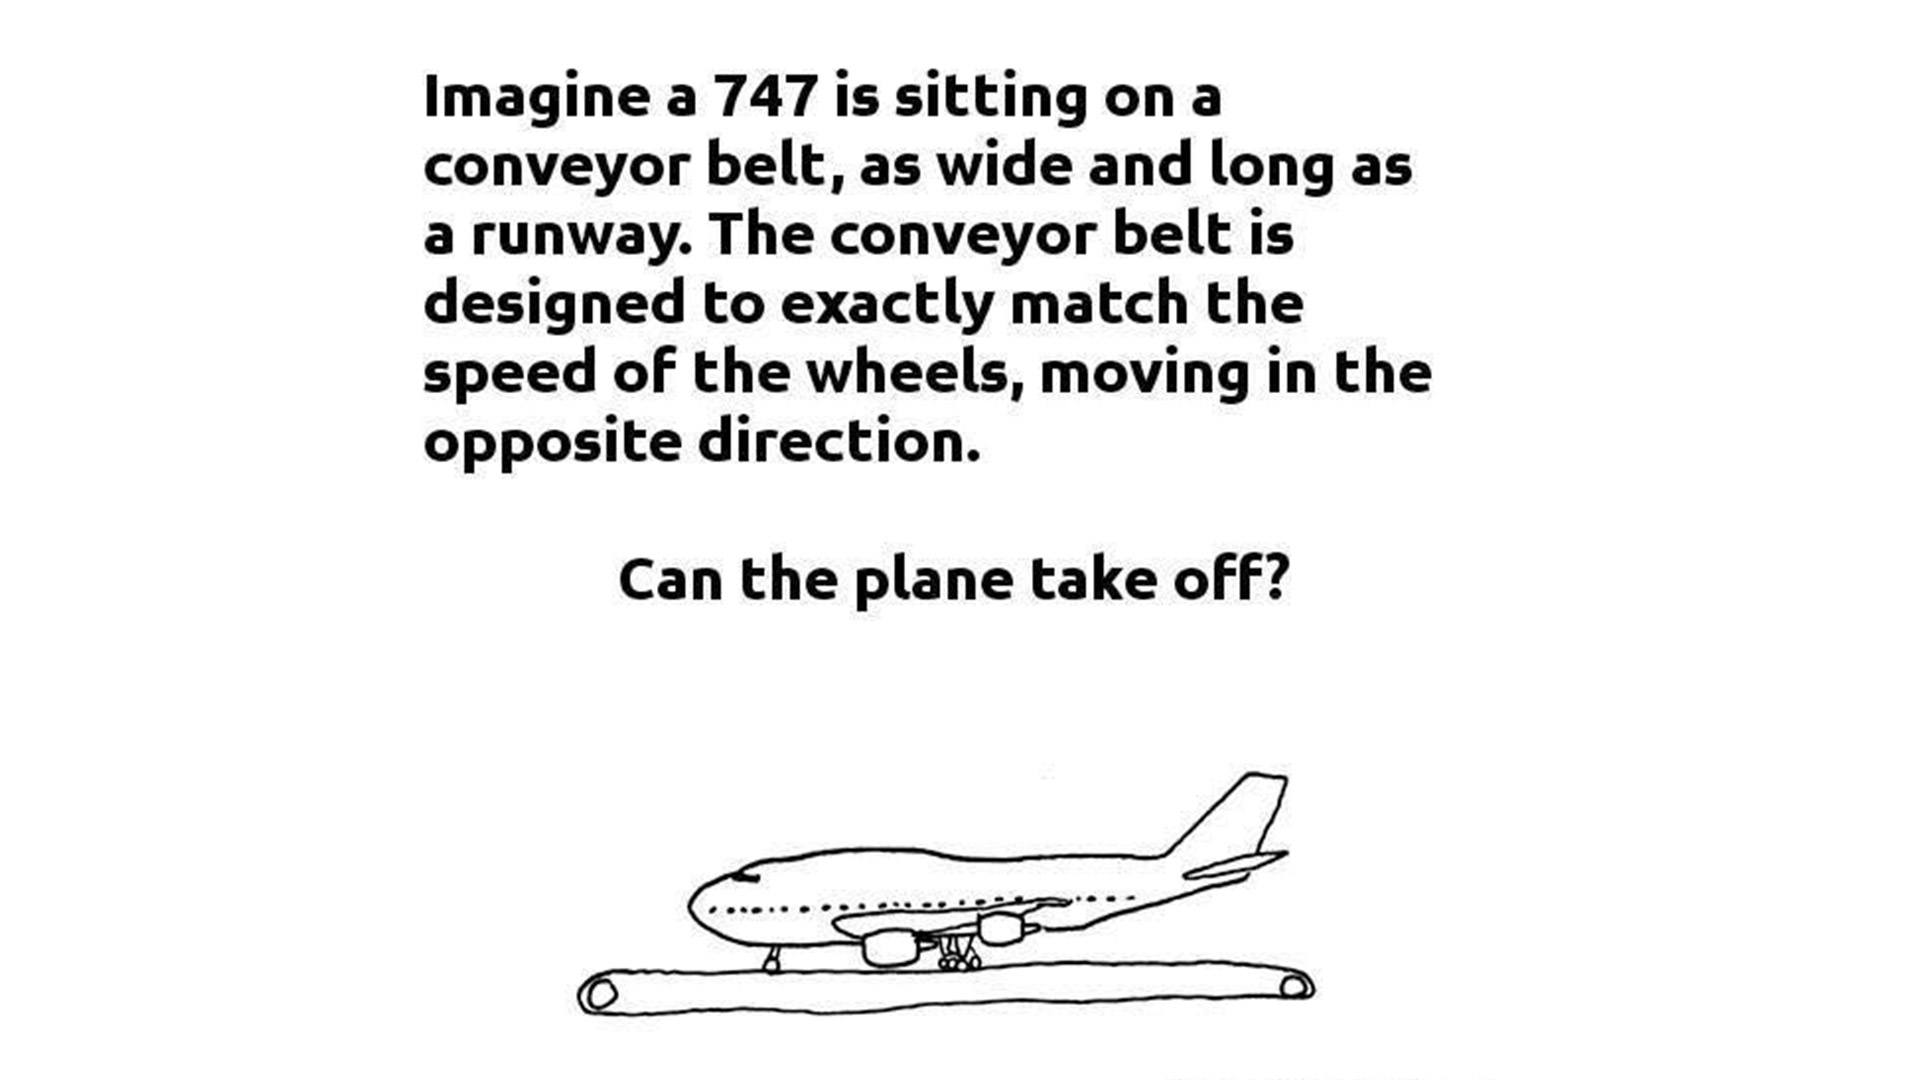 747-take-off-conveyor-belt-2.jpg